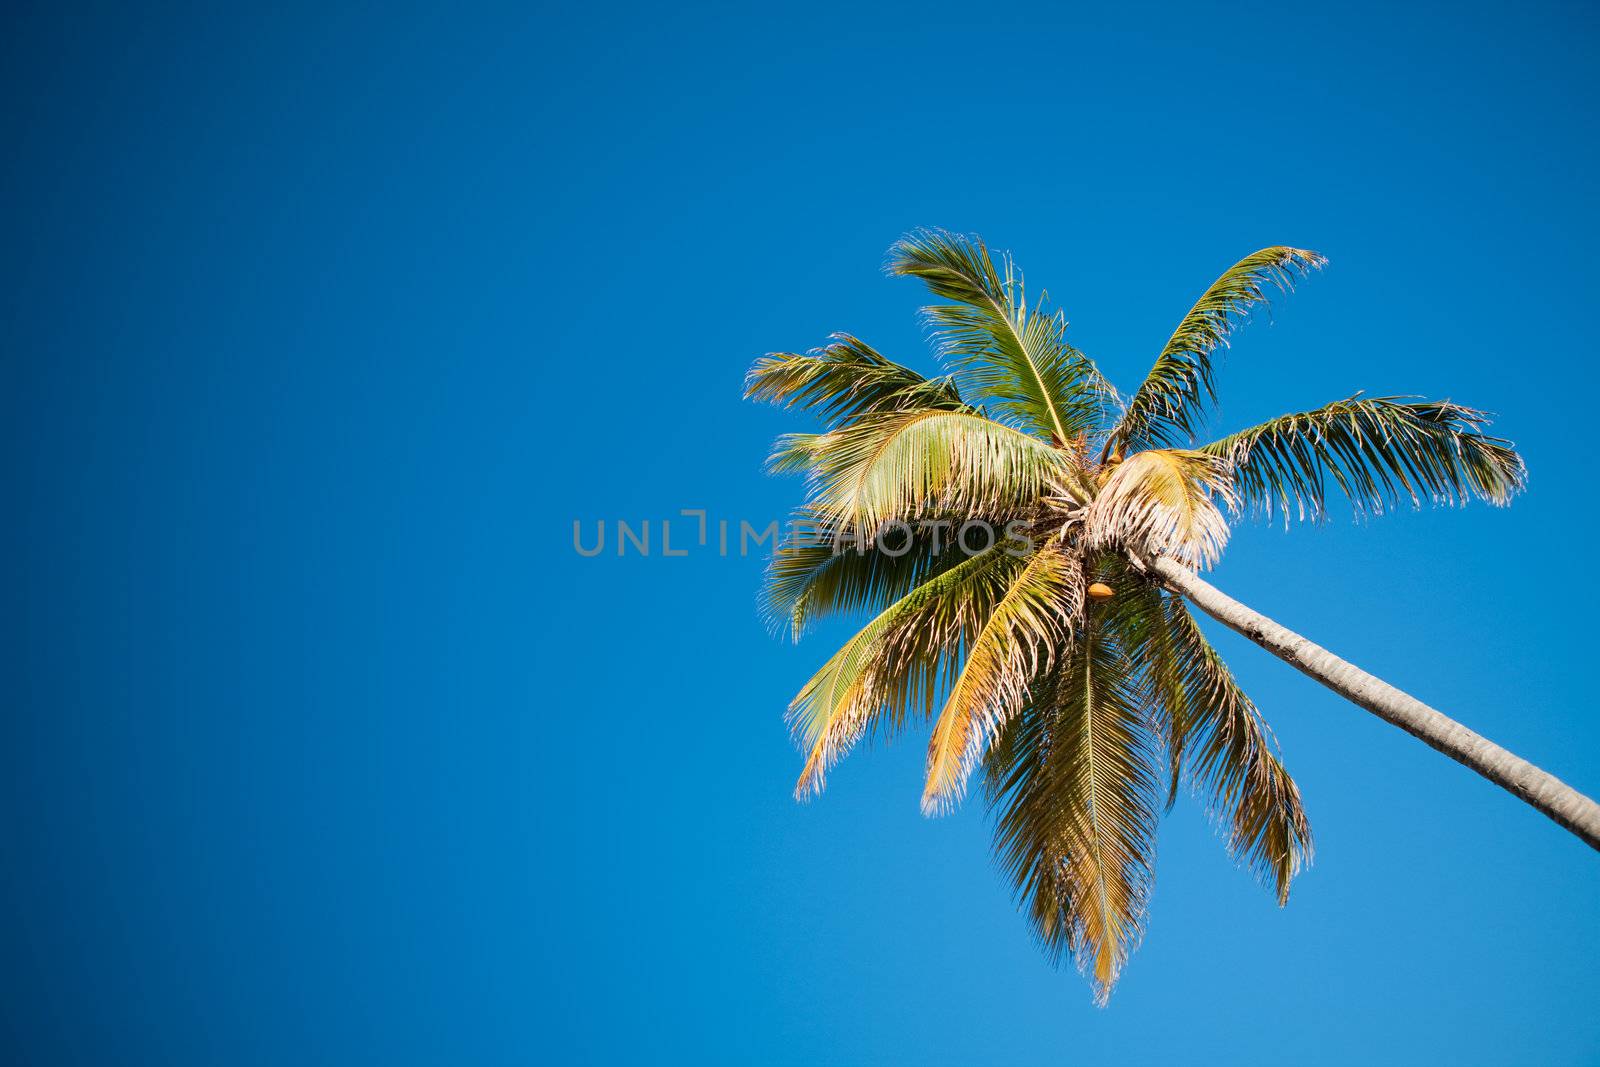 Coconut palms under blue Caribbean sky on summer day